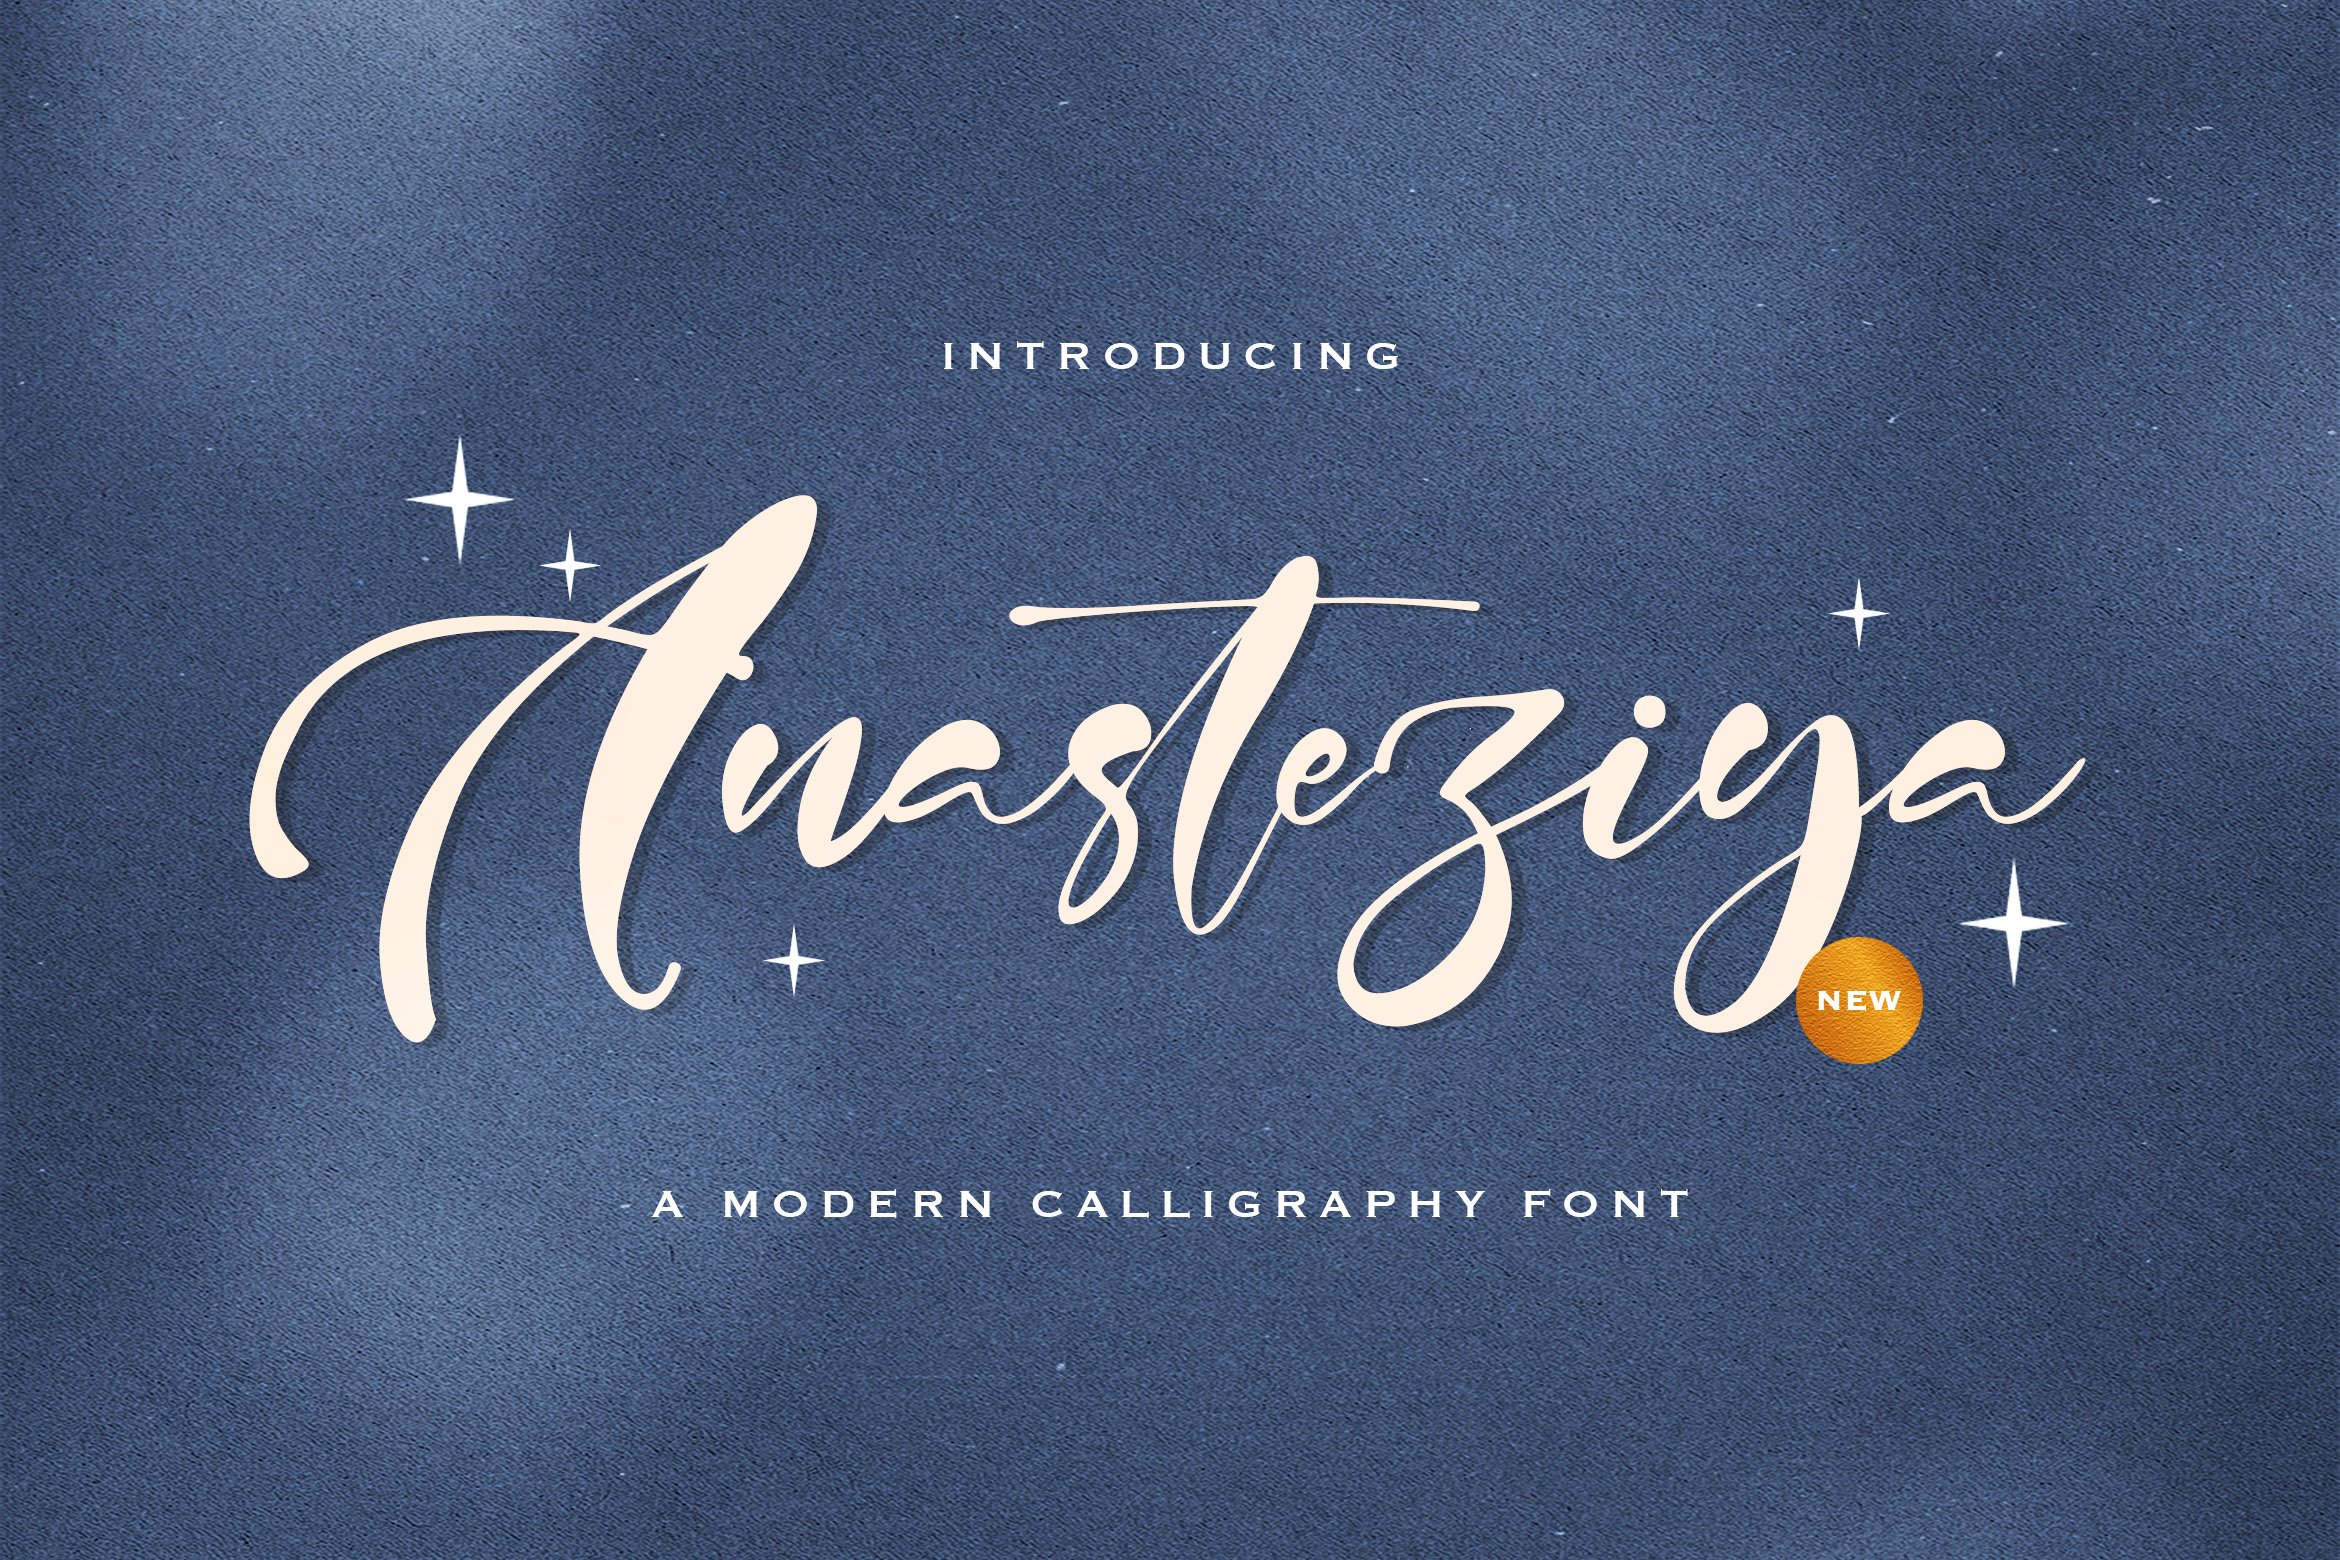 Anasteziya - Calligraphy Font cover image.